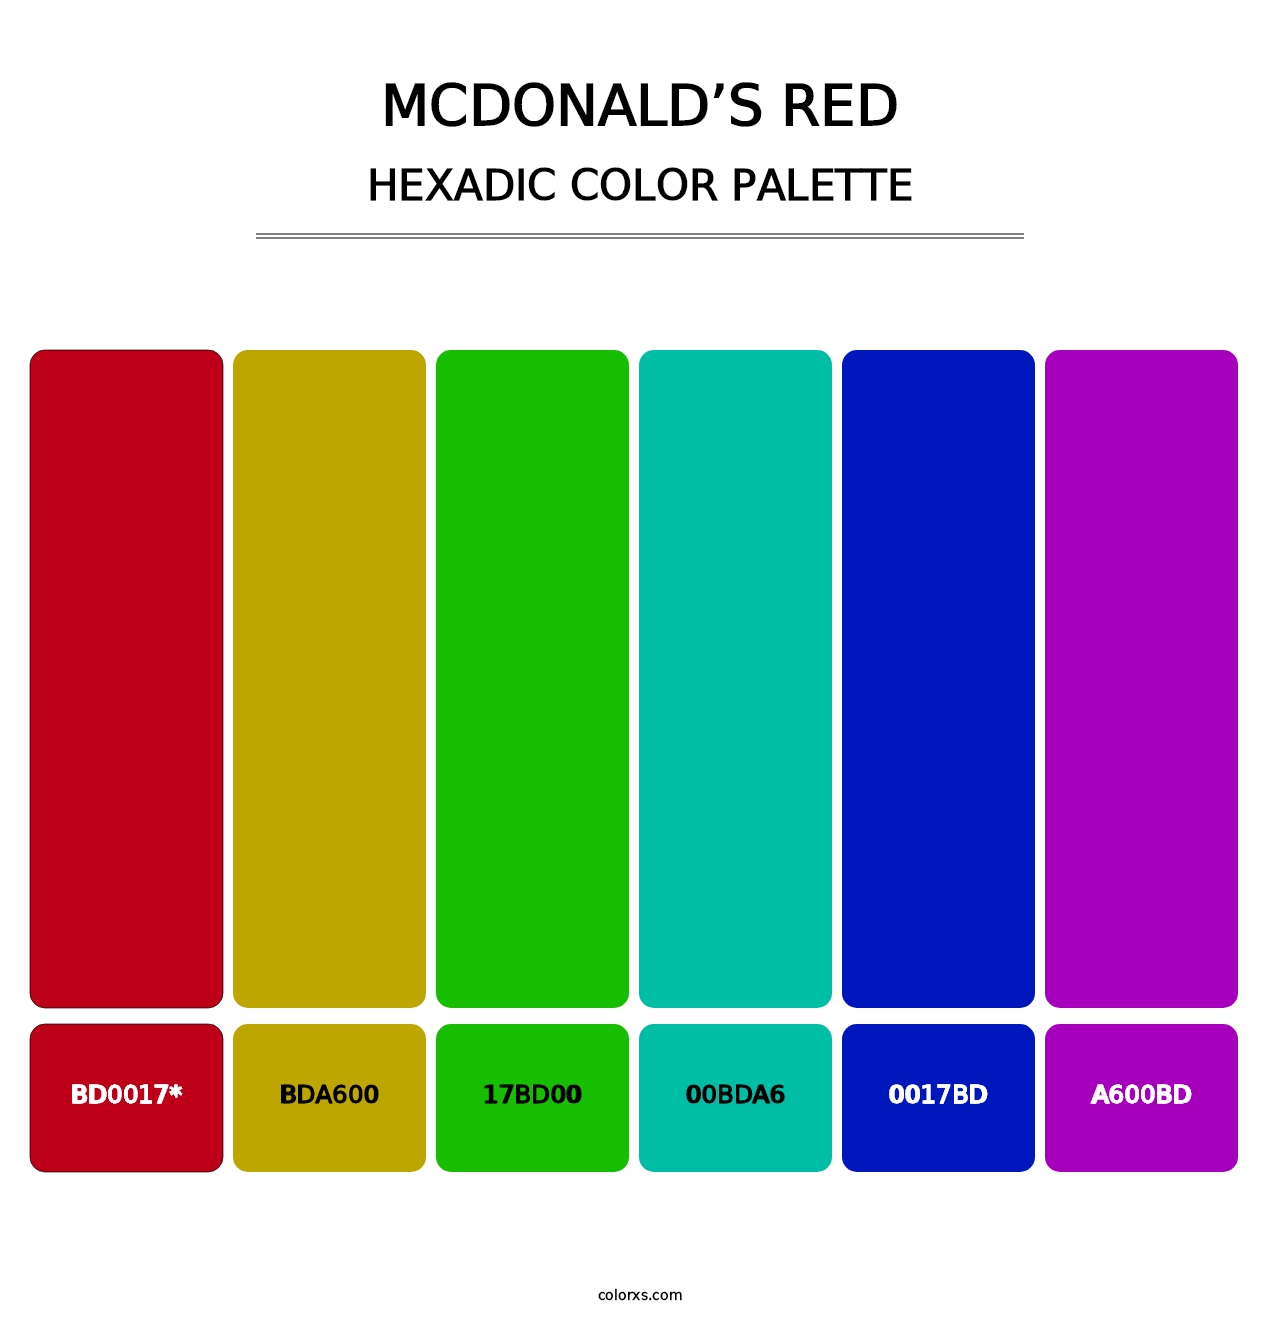 McDonald’s Red - Hexadic Color Palette